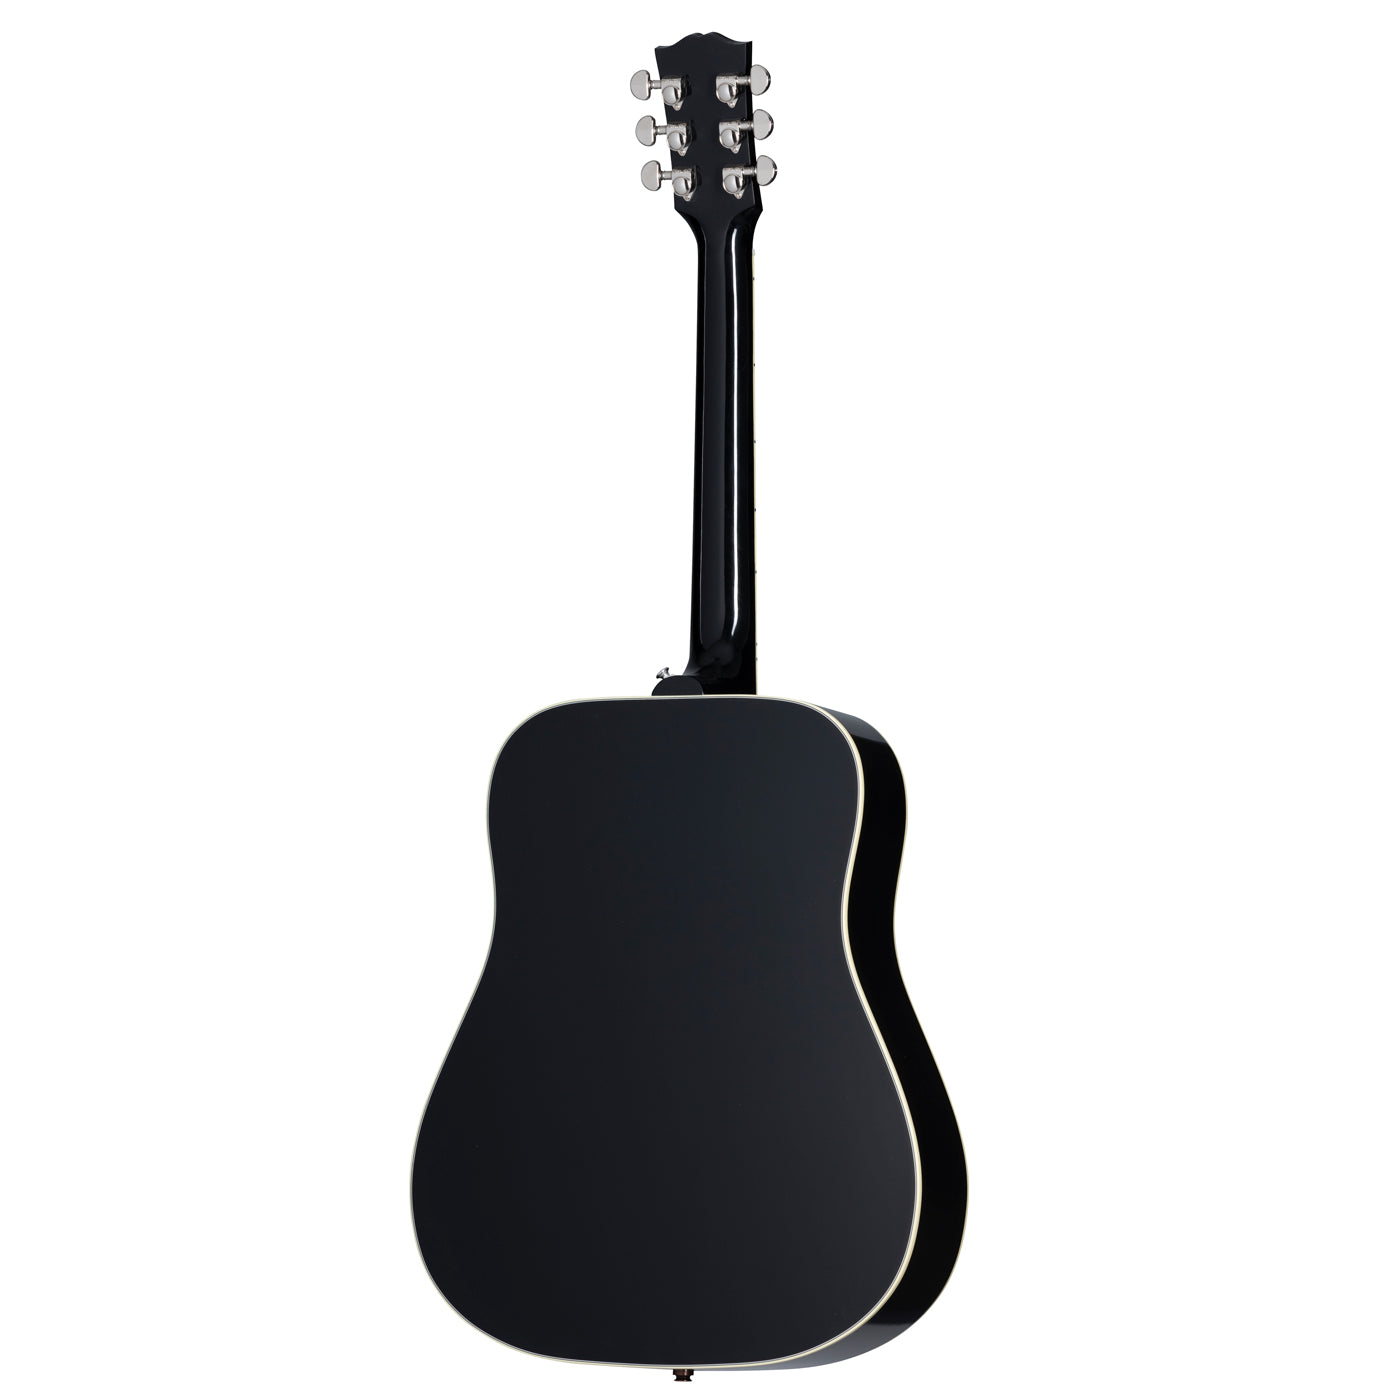 Gibson Hummingbird Standard Ebony